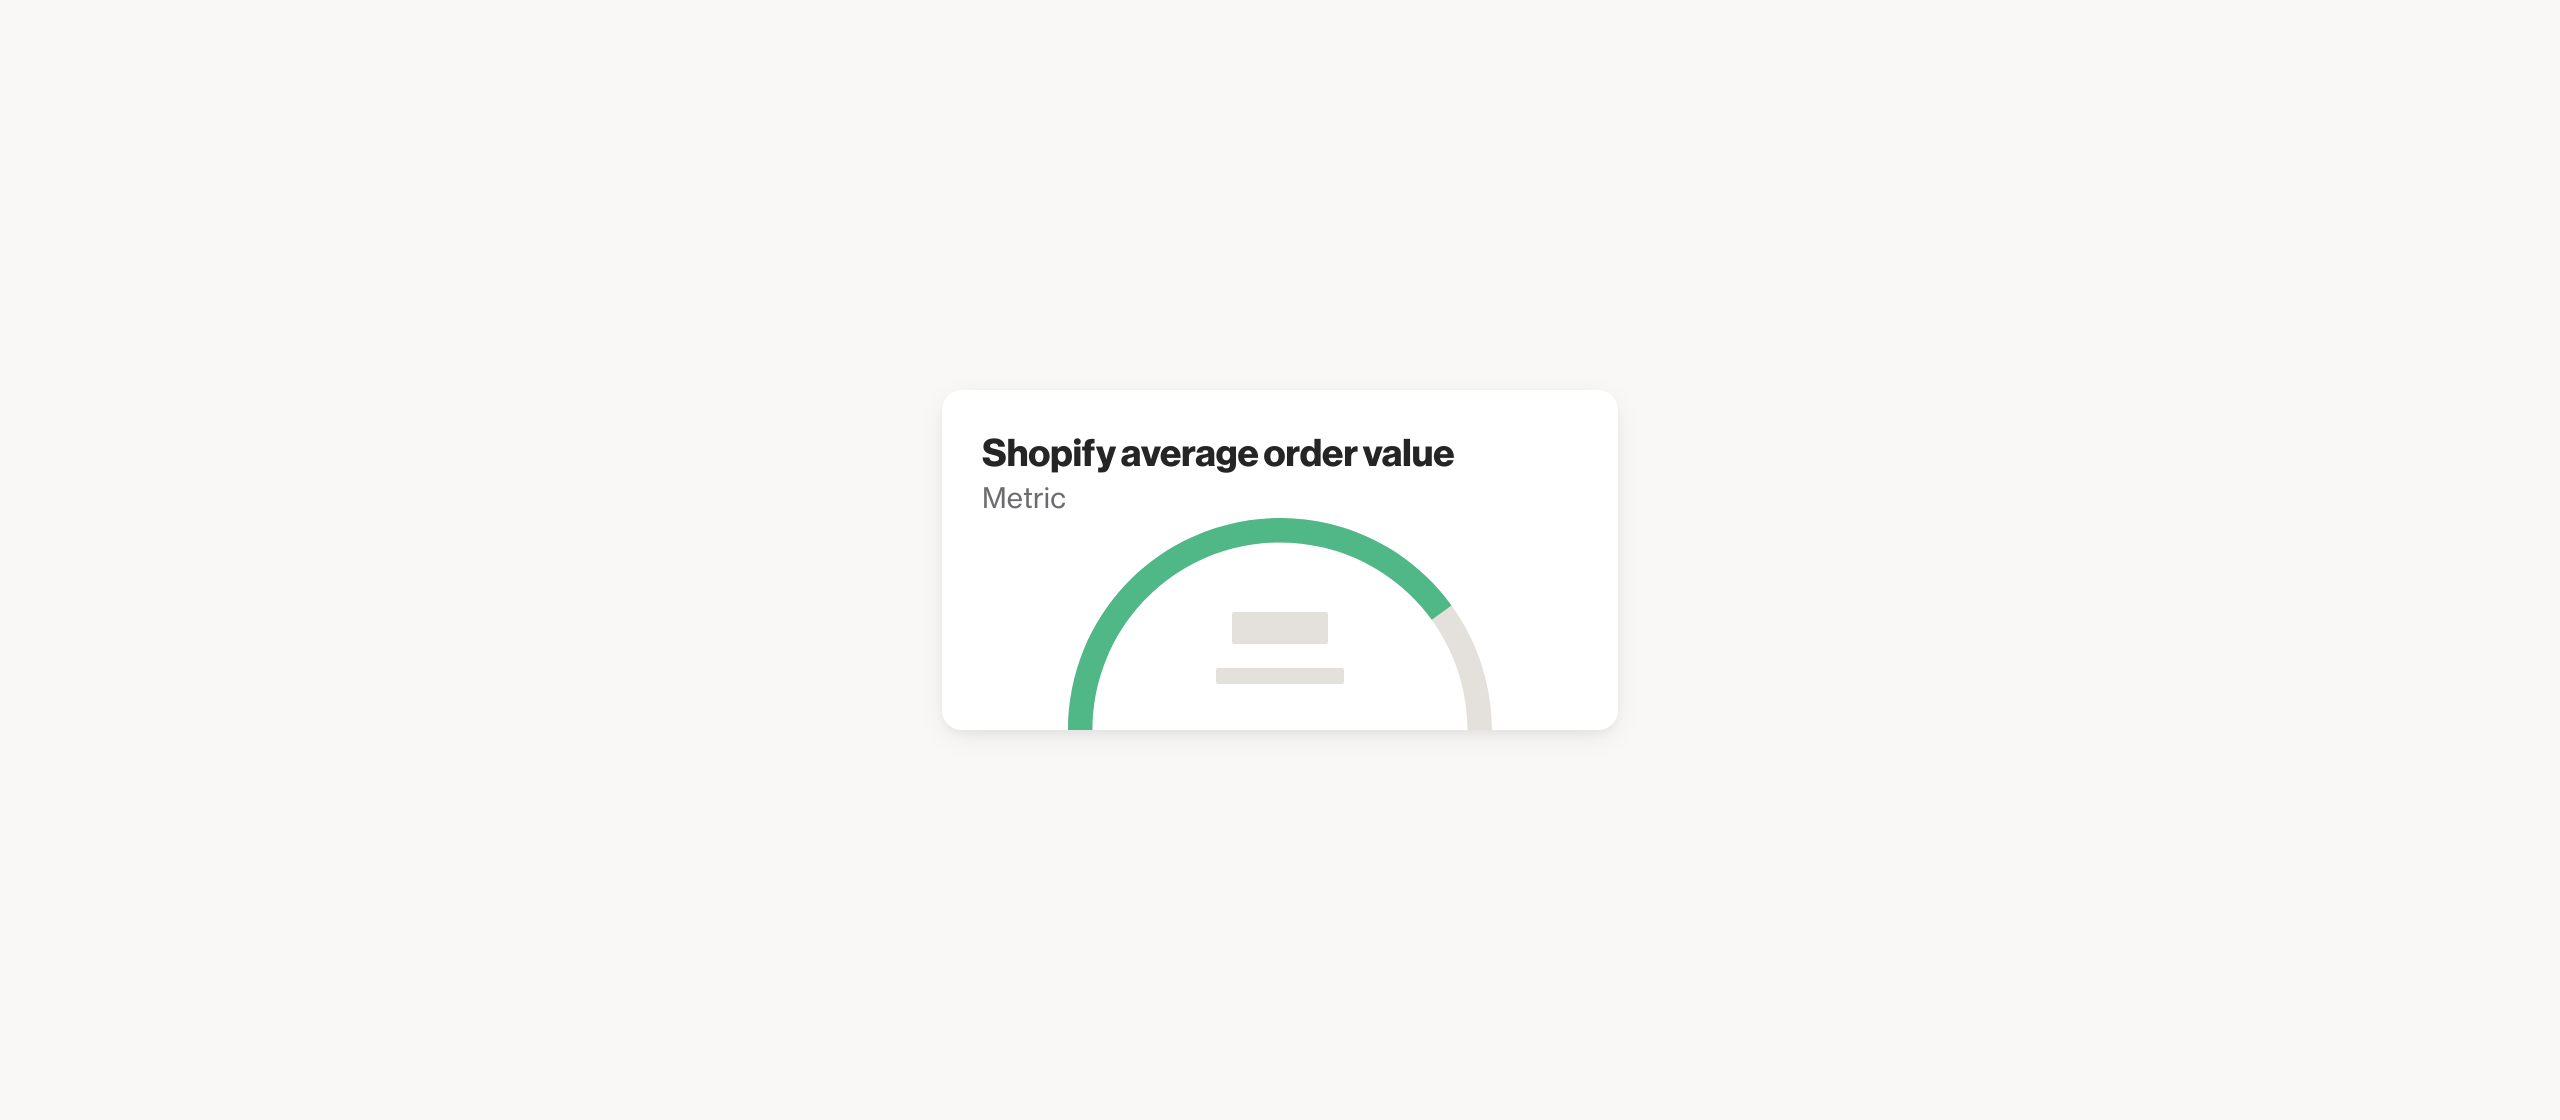 Shopify average order value